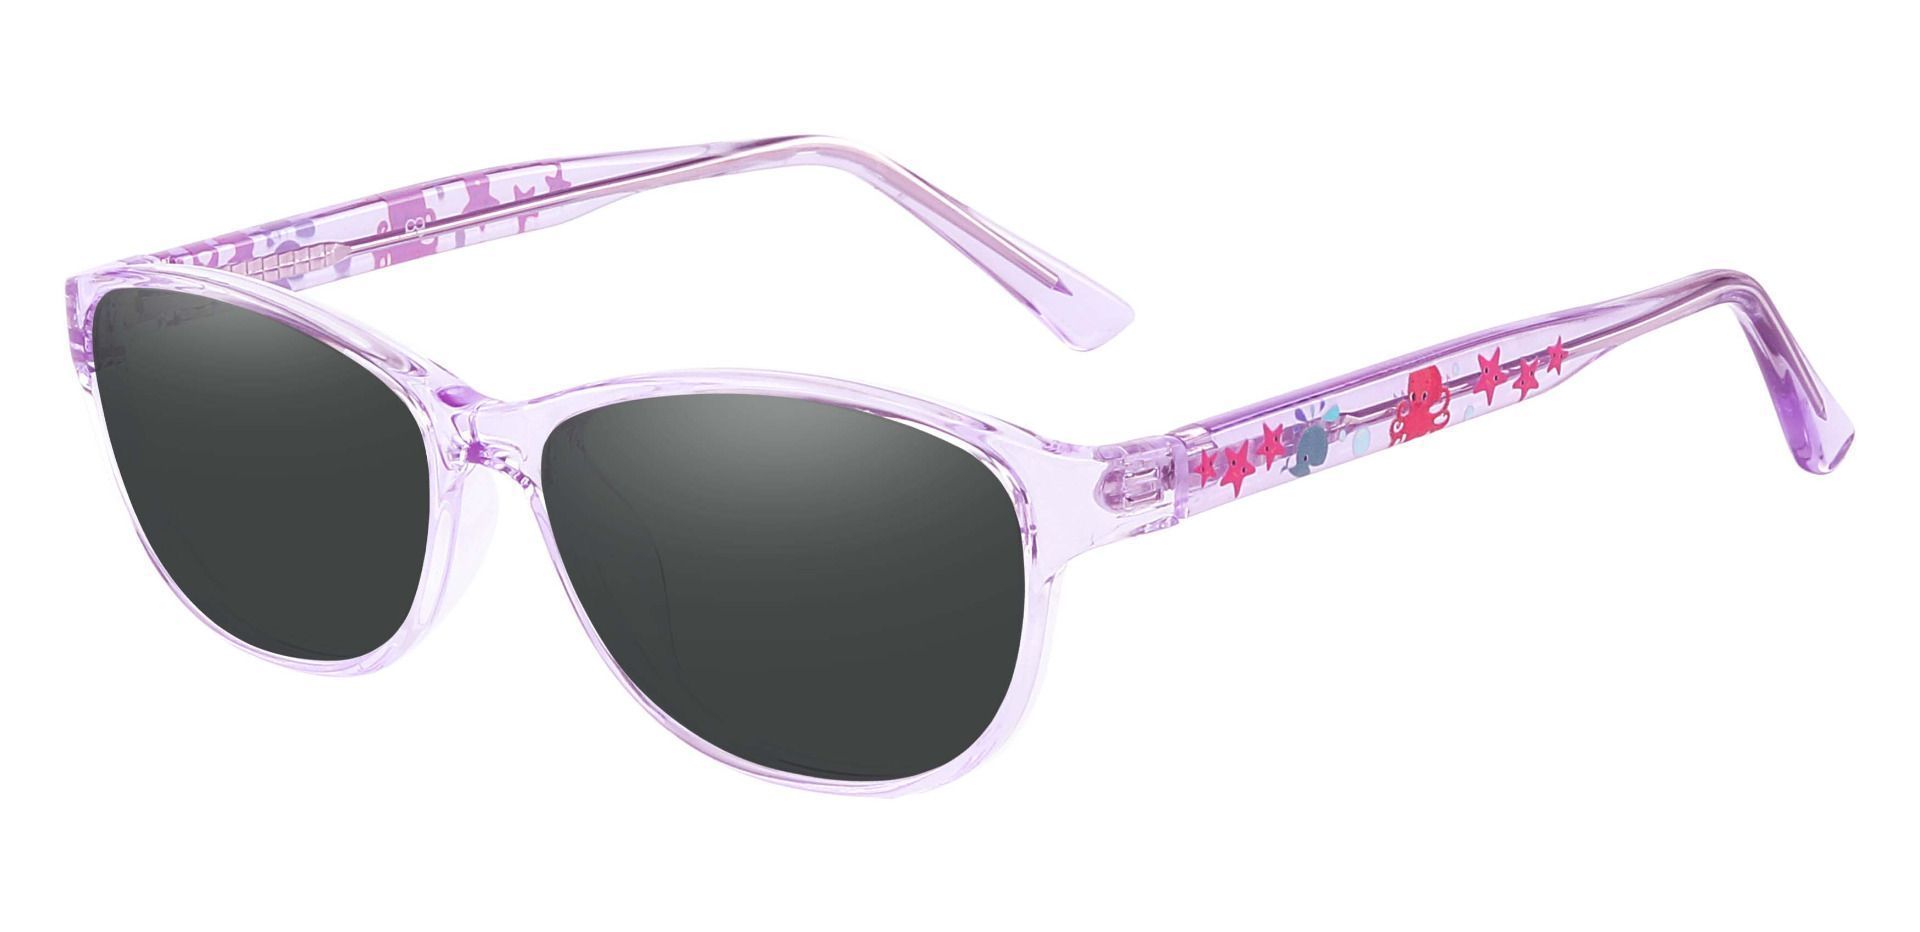 Patsy Oval Prescription Sunglasses - Purple Frame With Gray Lenses